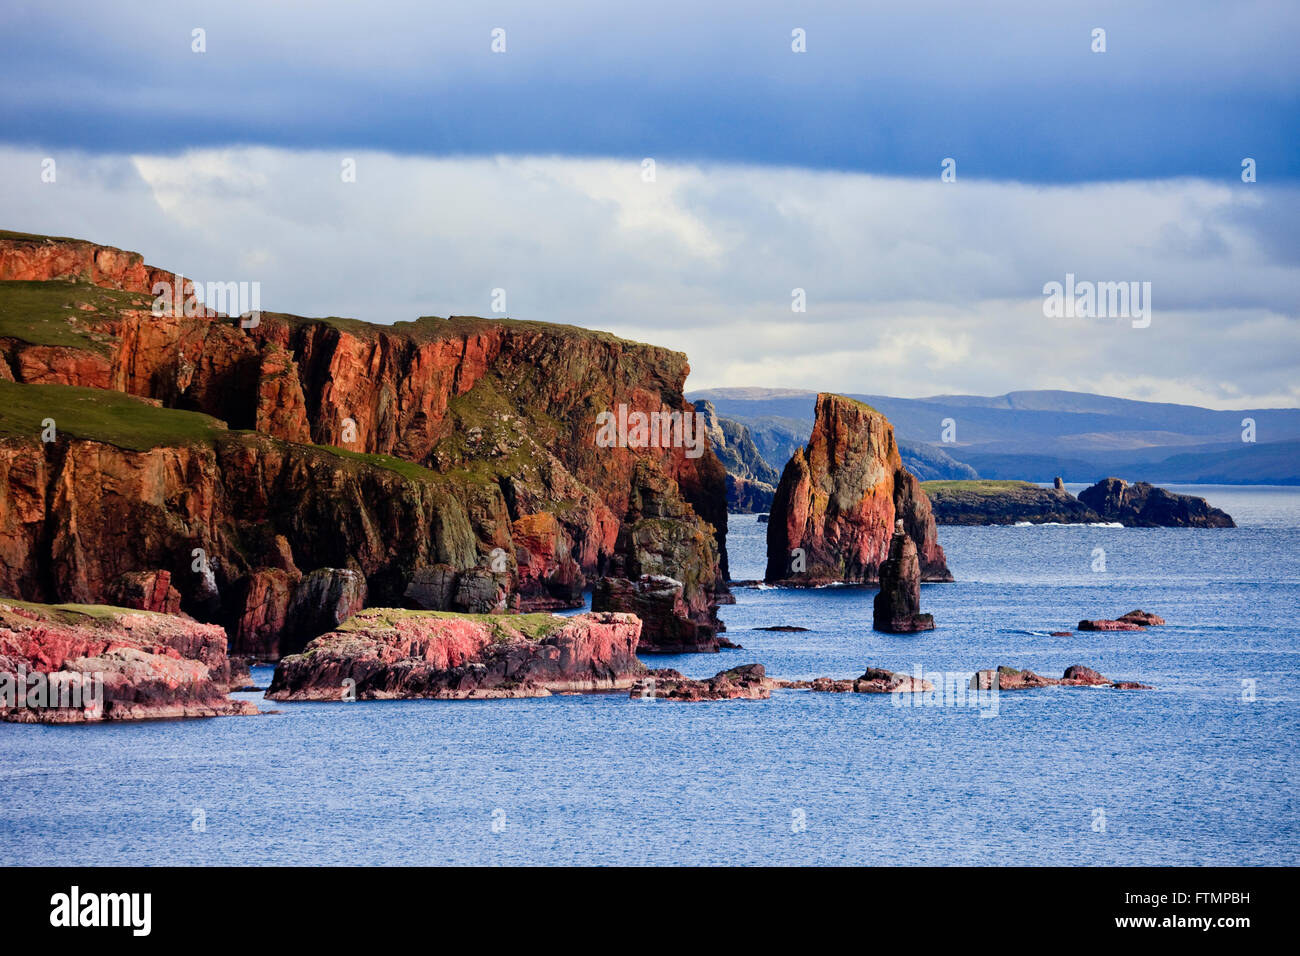 The Drongs red sandstone sea stacks in Braewick on stunning rugged Scottish Shetland coastline landscape Eshaness Shetland Islands Scotland UK Britain Stock Photo